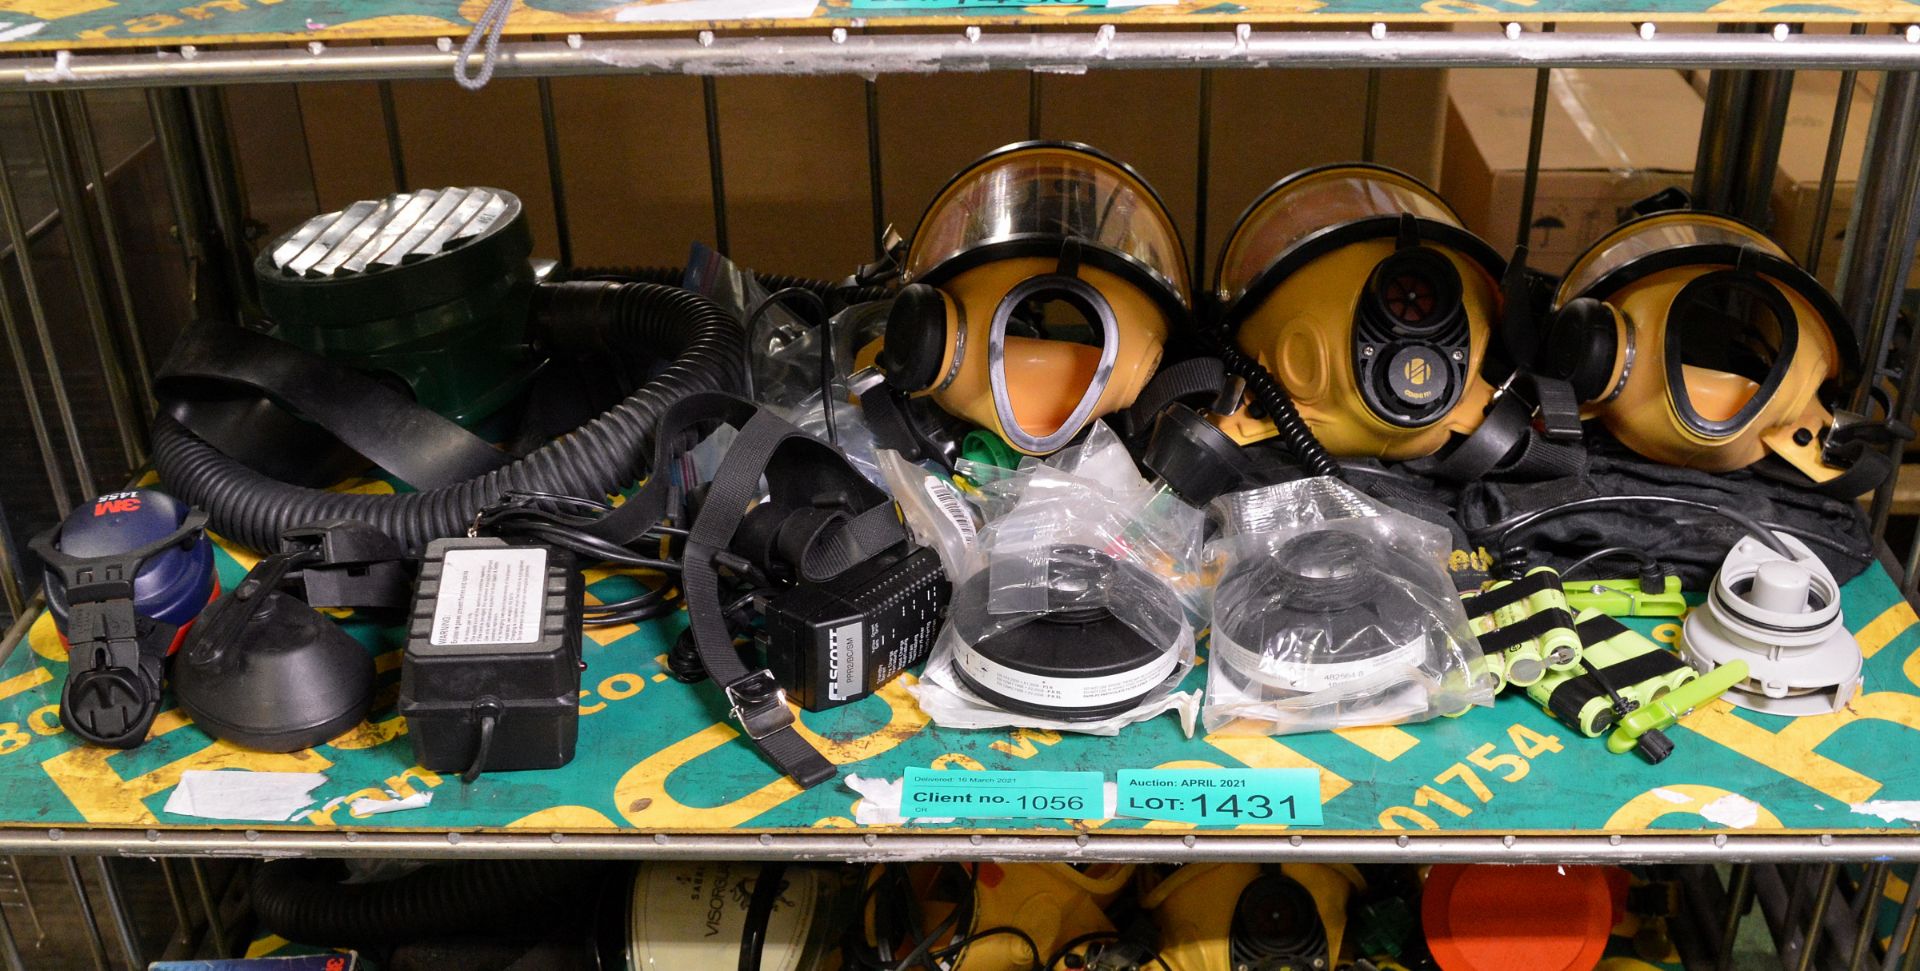 Respirator system - masks, headphones, battery pack, filters